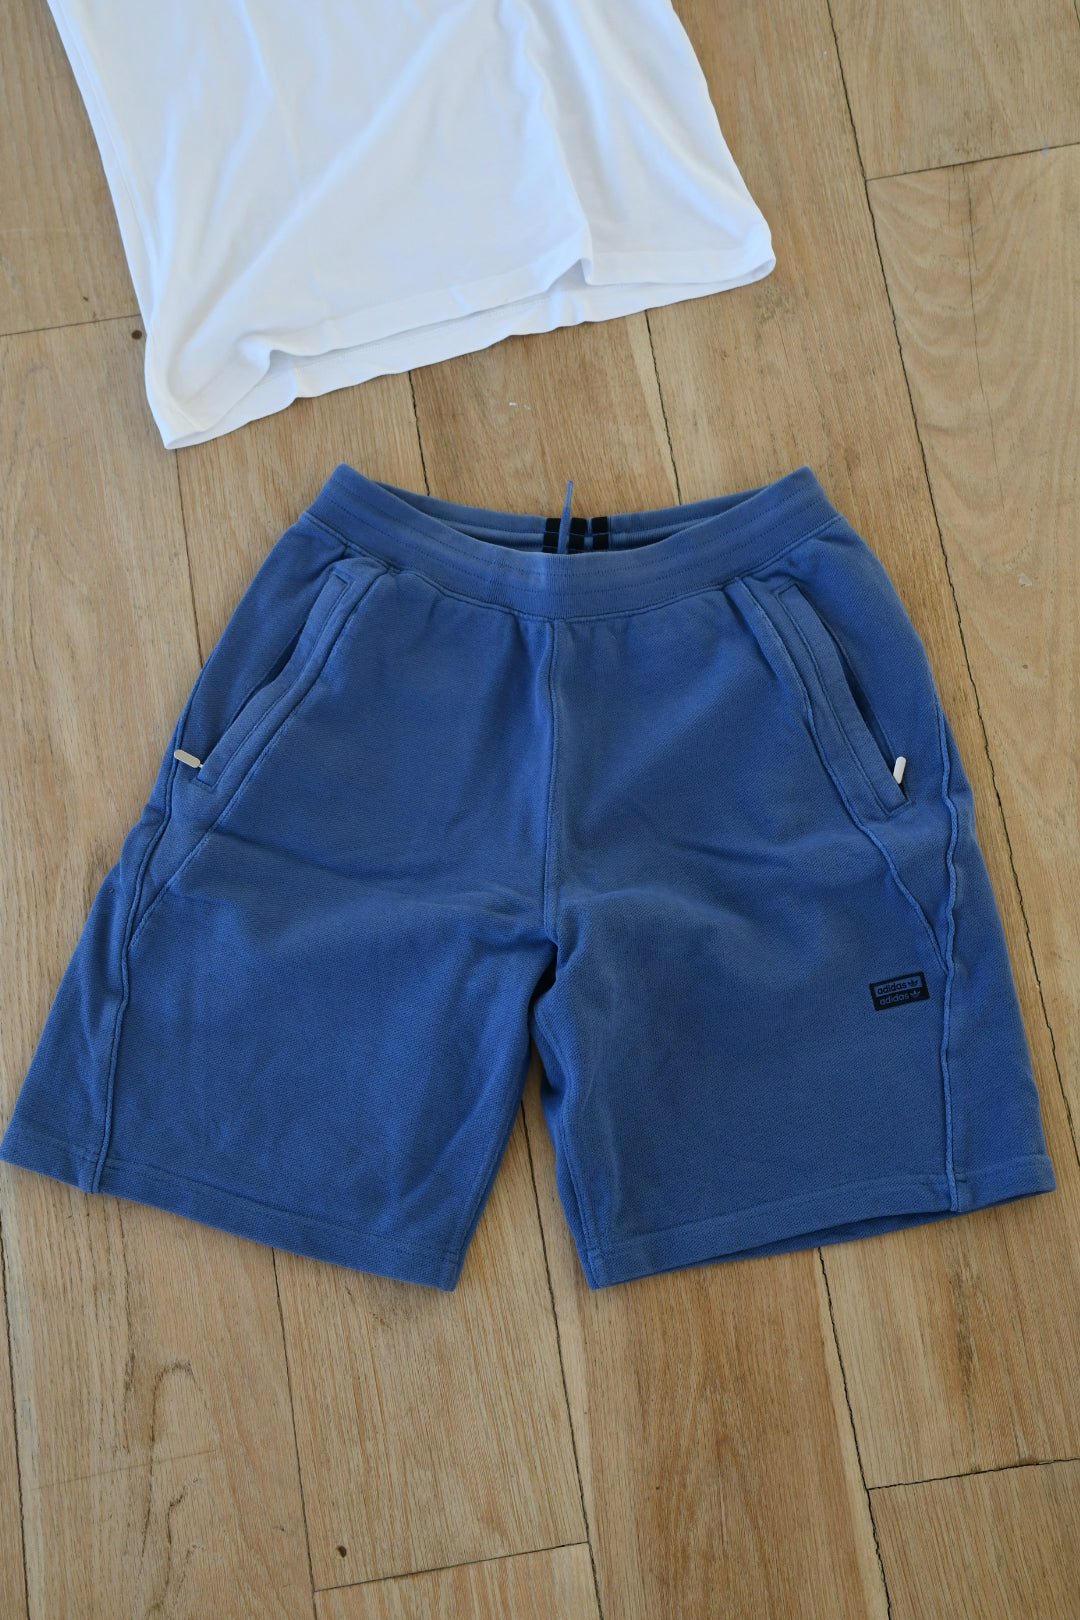 Image of Jersey fabric shorts